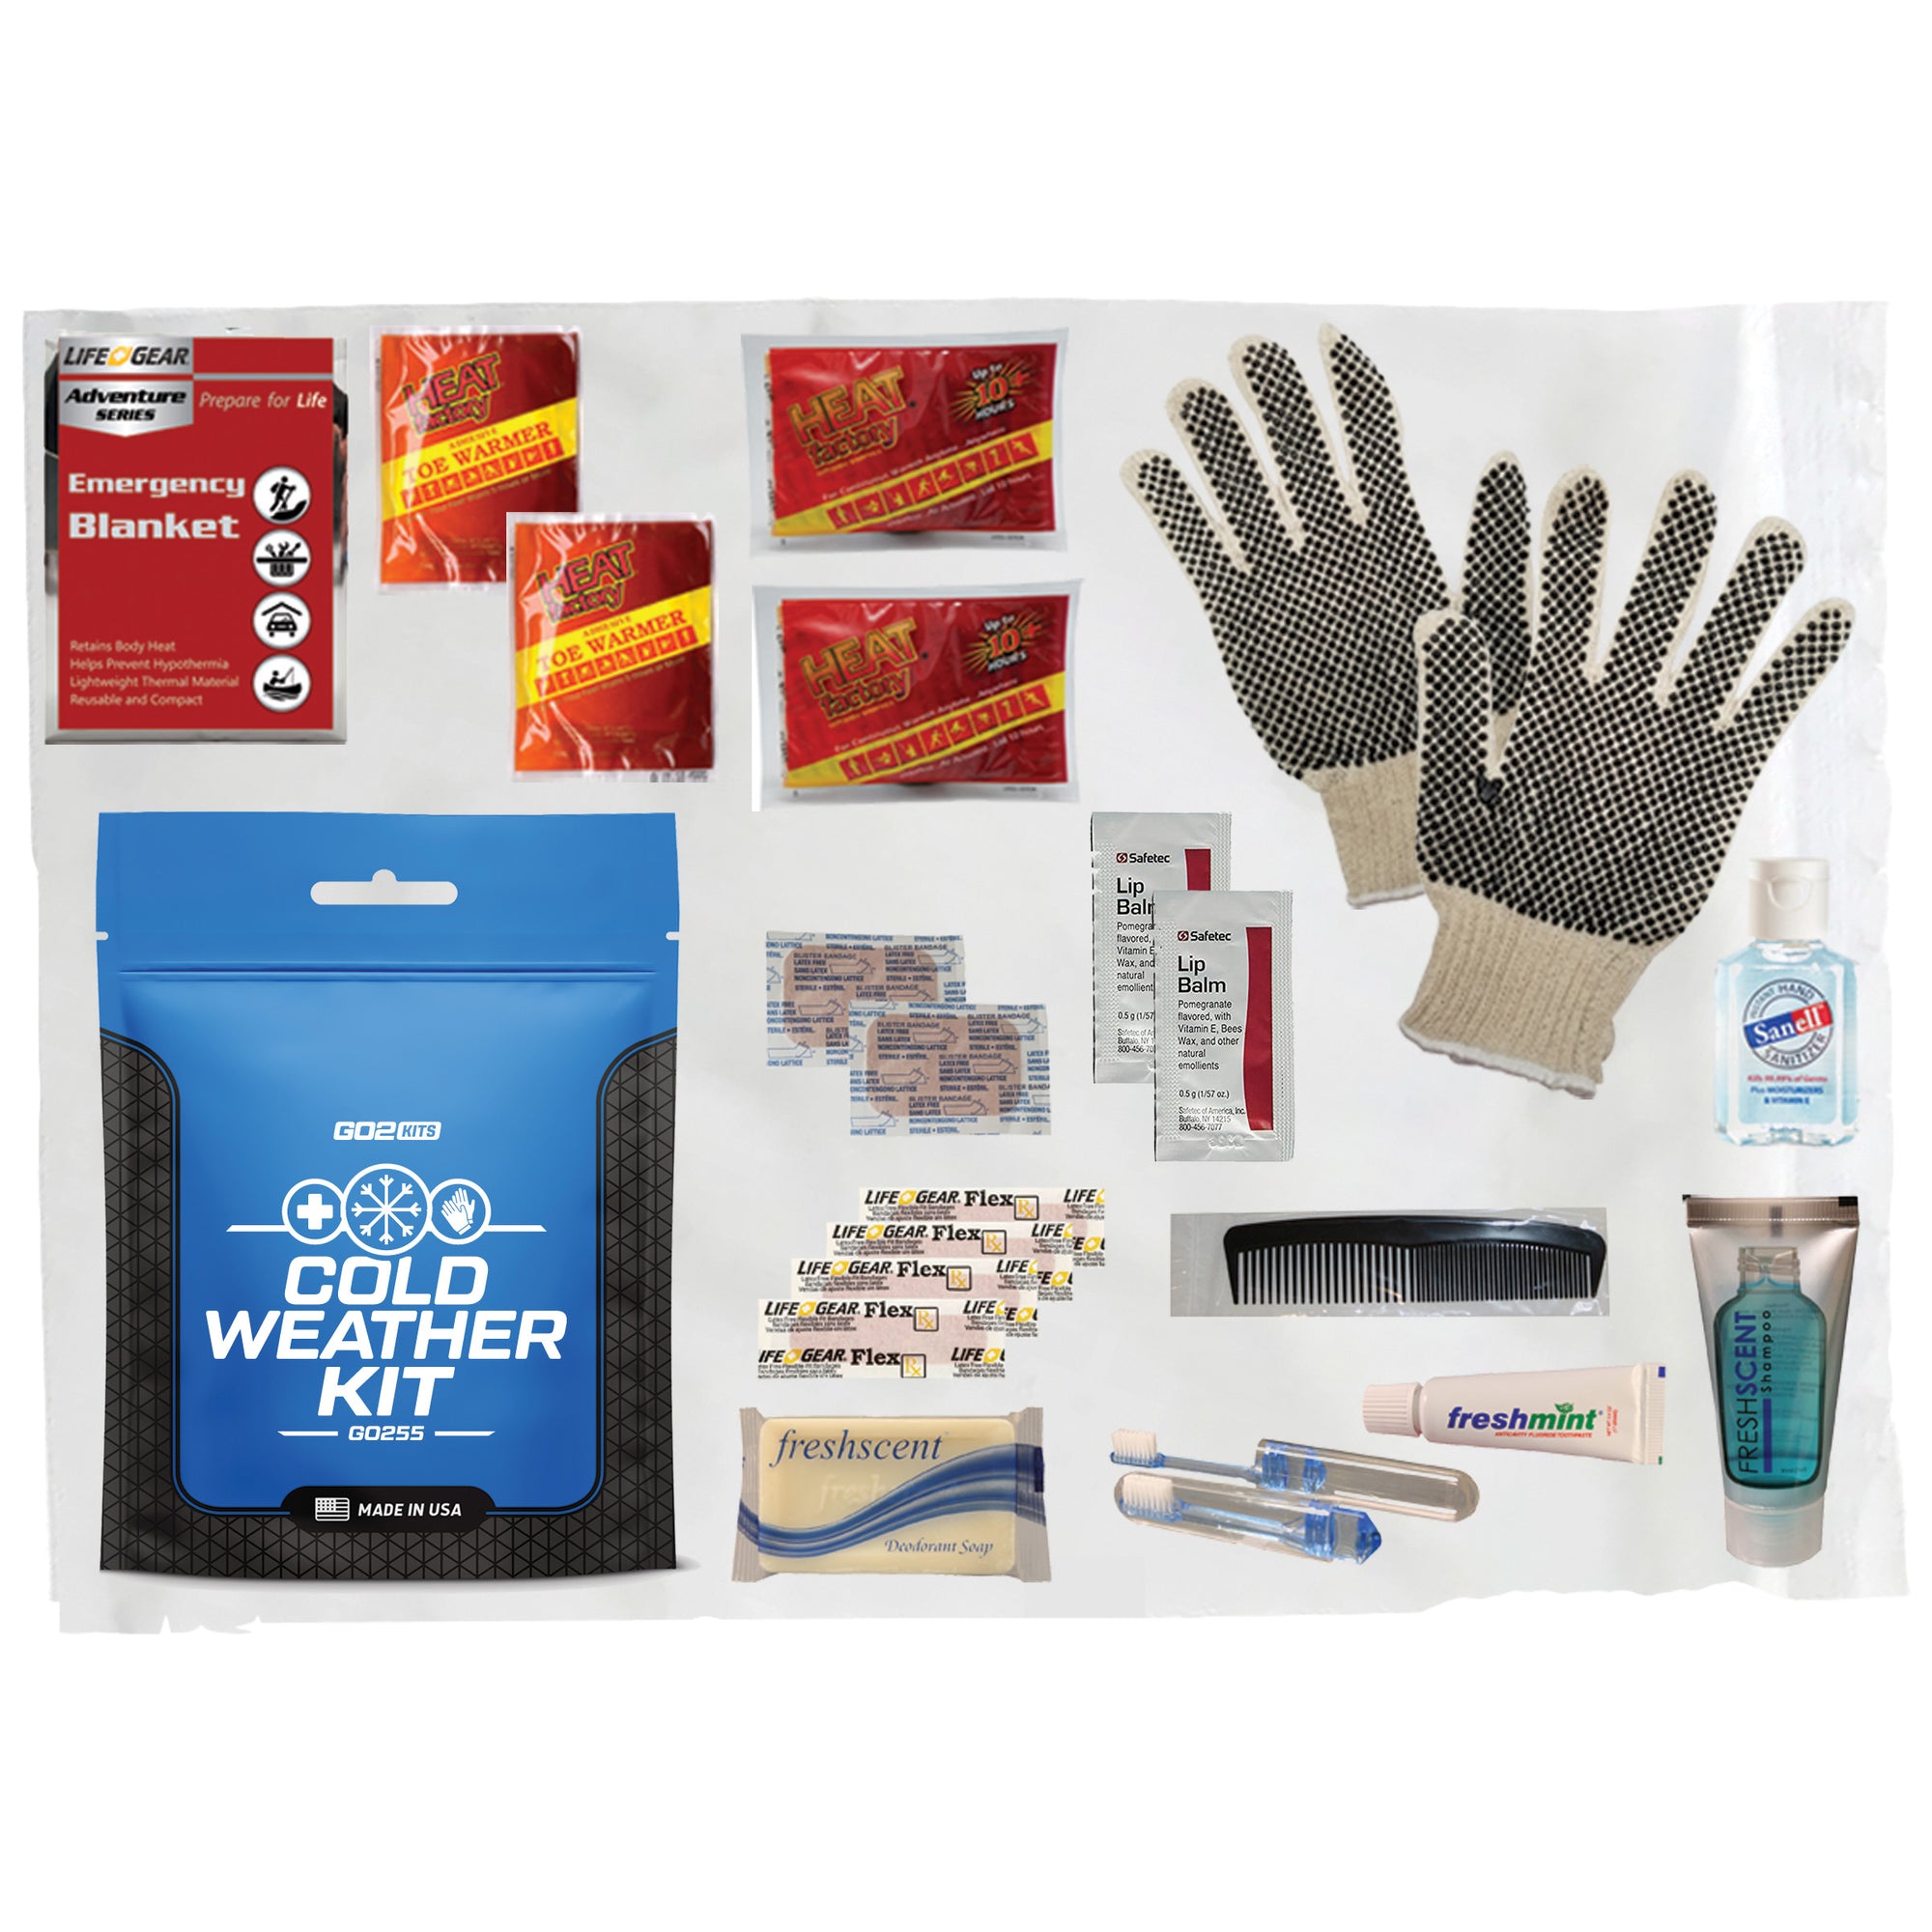 Hygiene Cold Weather Kit 2.0 (GO255)